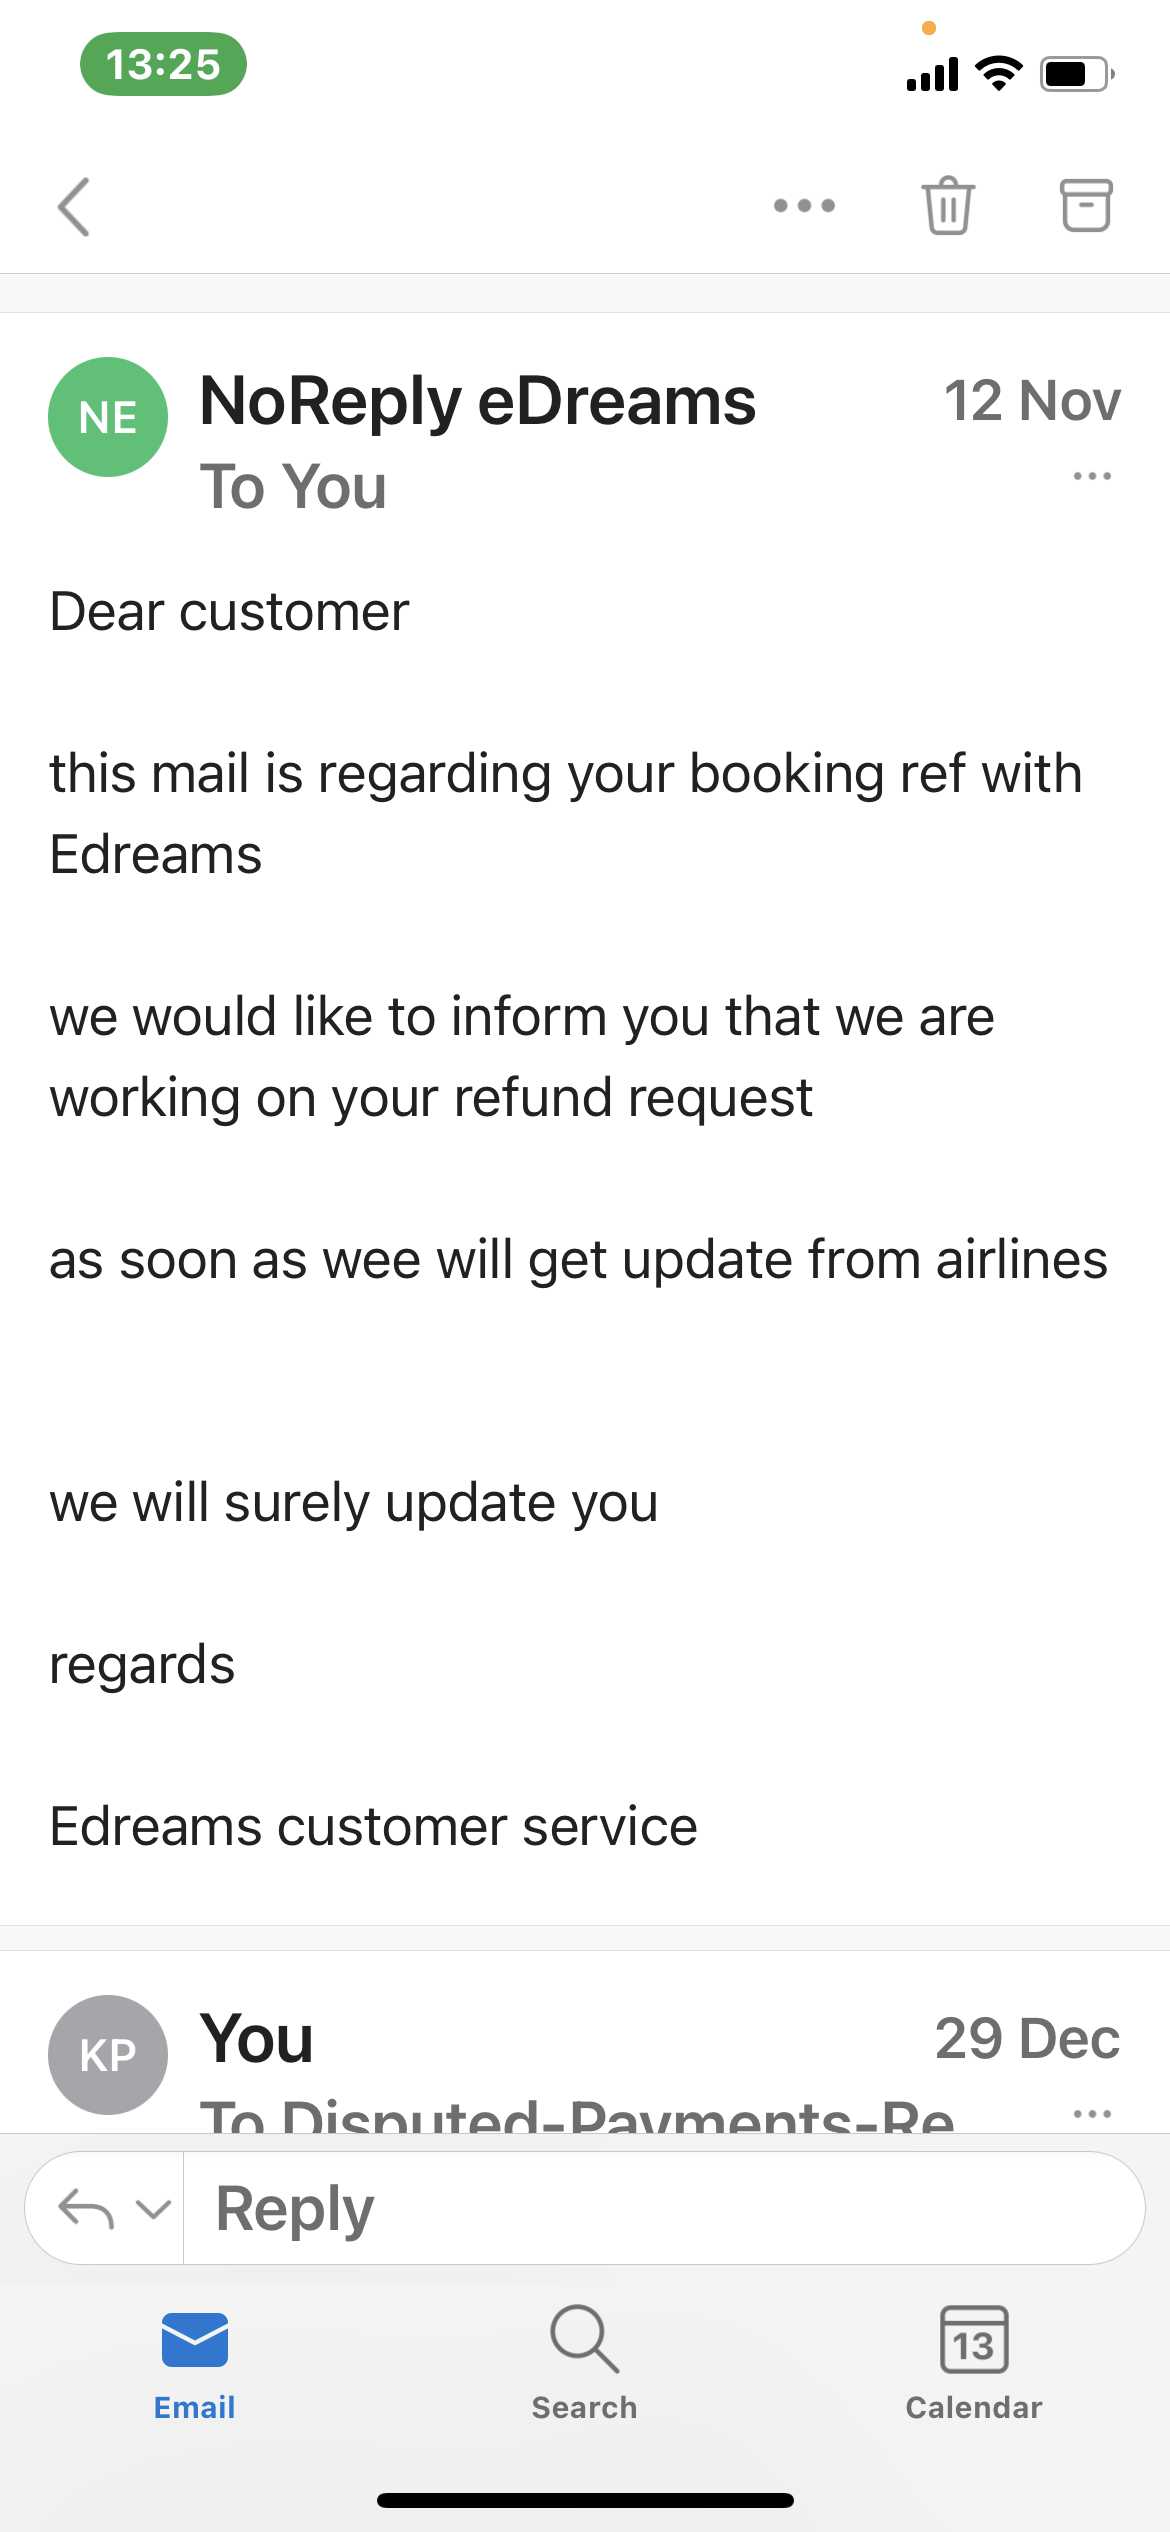 eDreams complaint Didn’t get refund